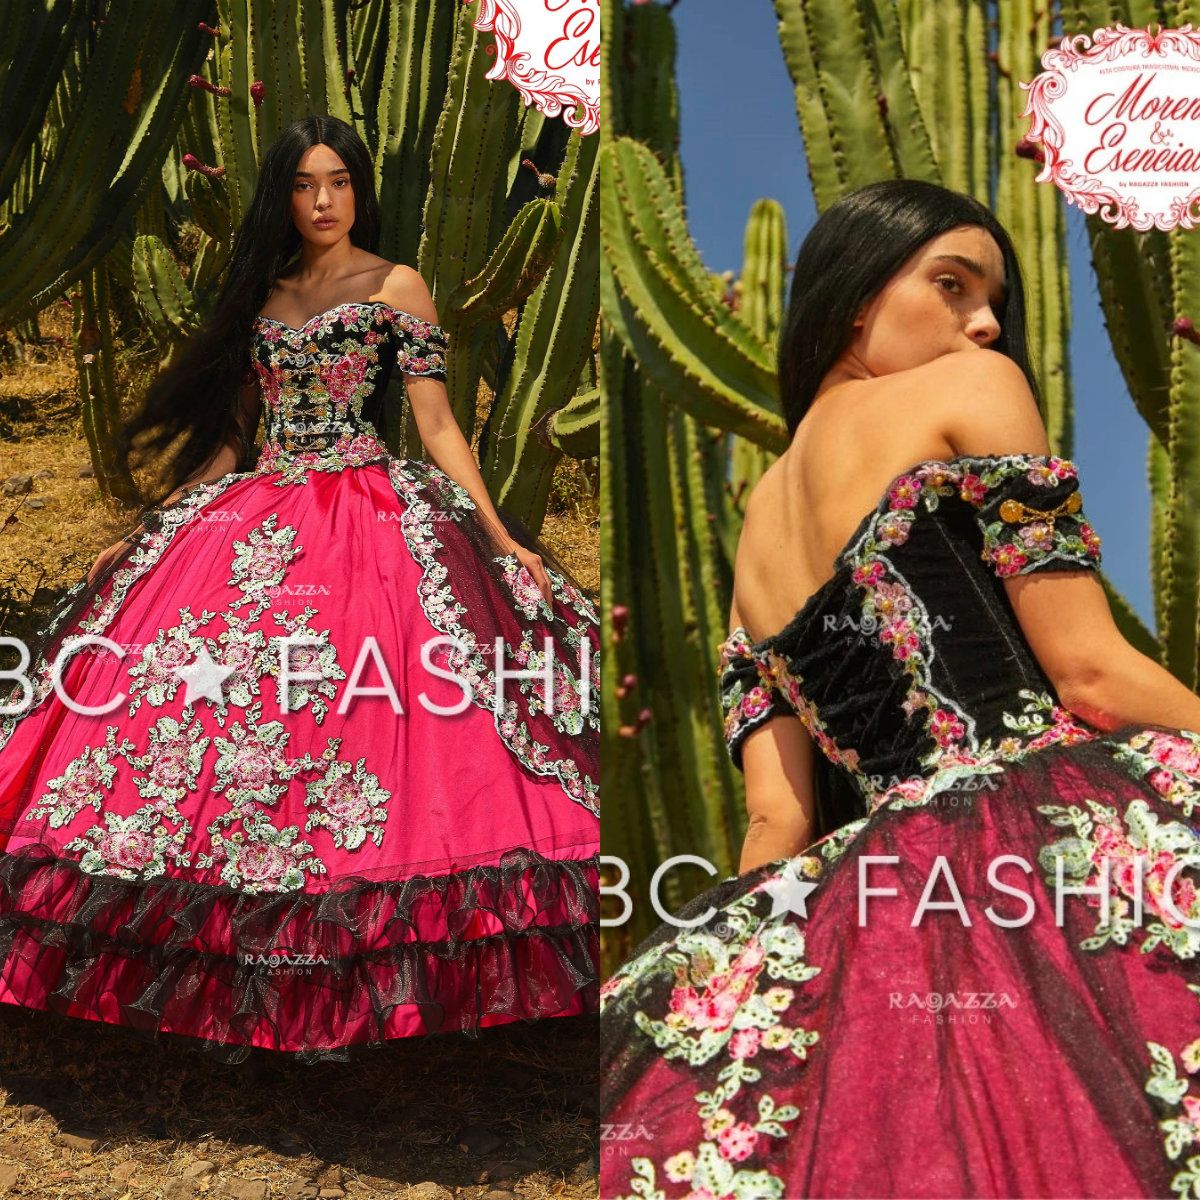 floral charro quinceanera dresses